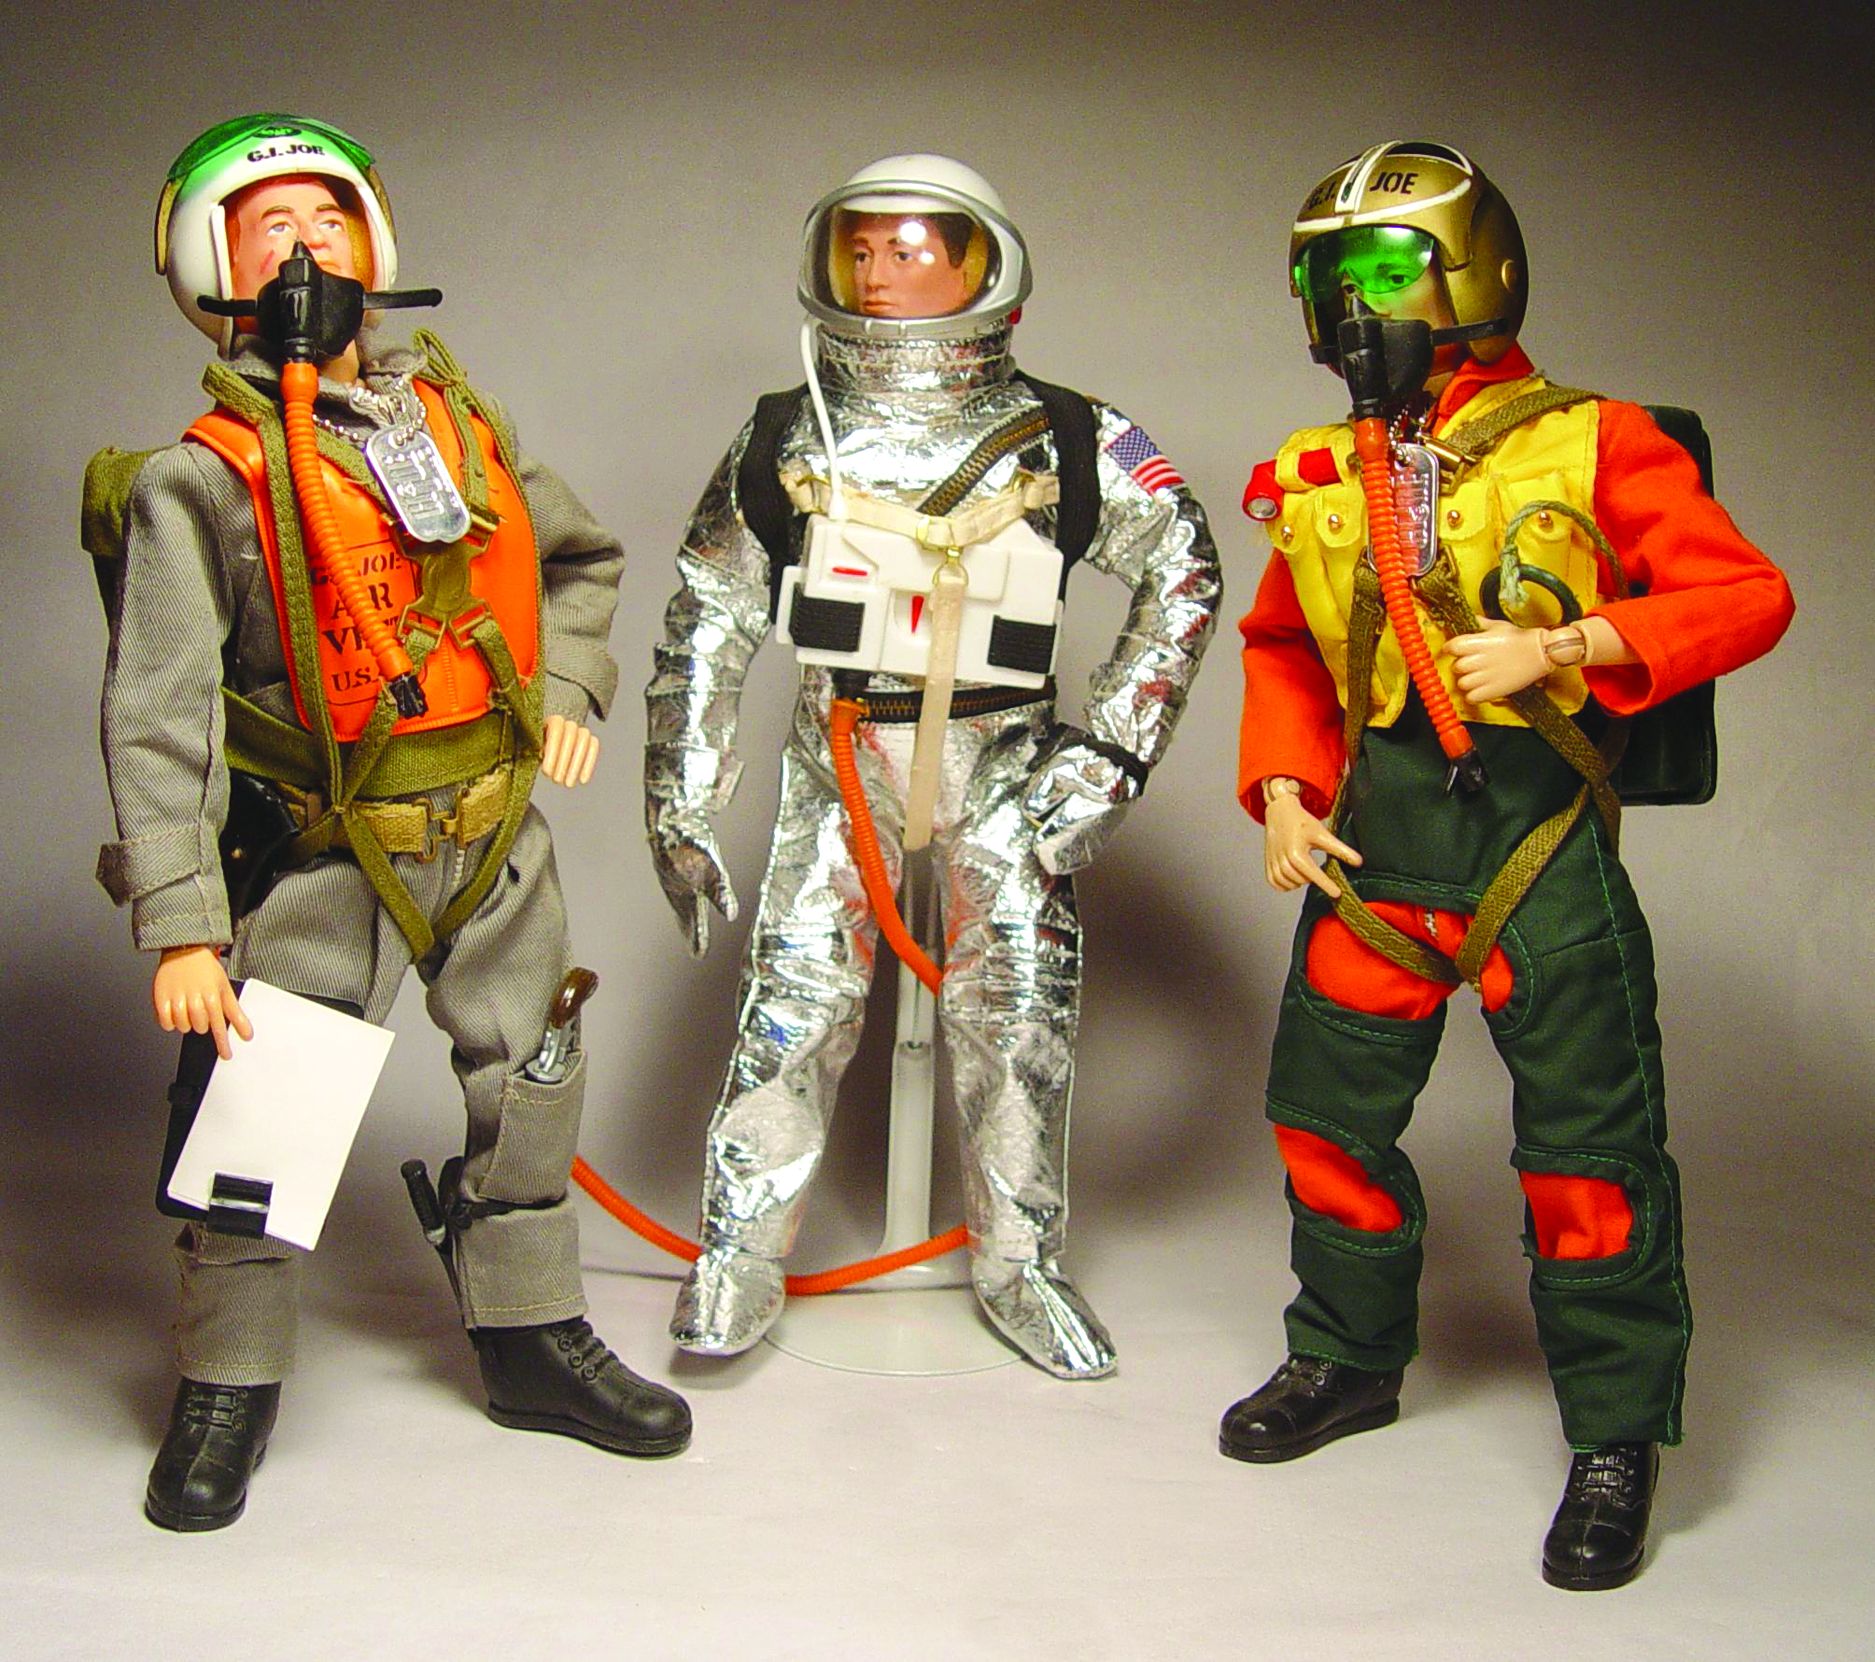 GI Joe Action Pilots flank the GI Joe Astronaut, all wearing complete gear.